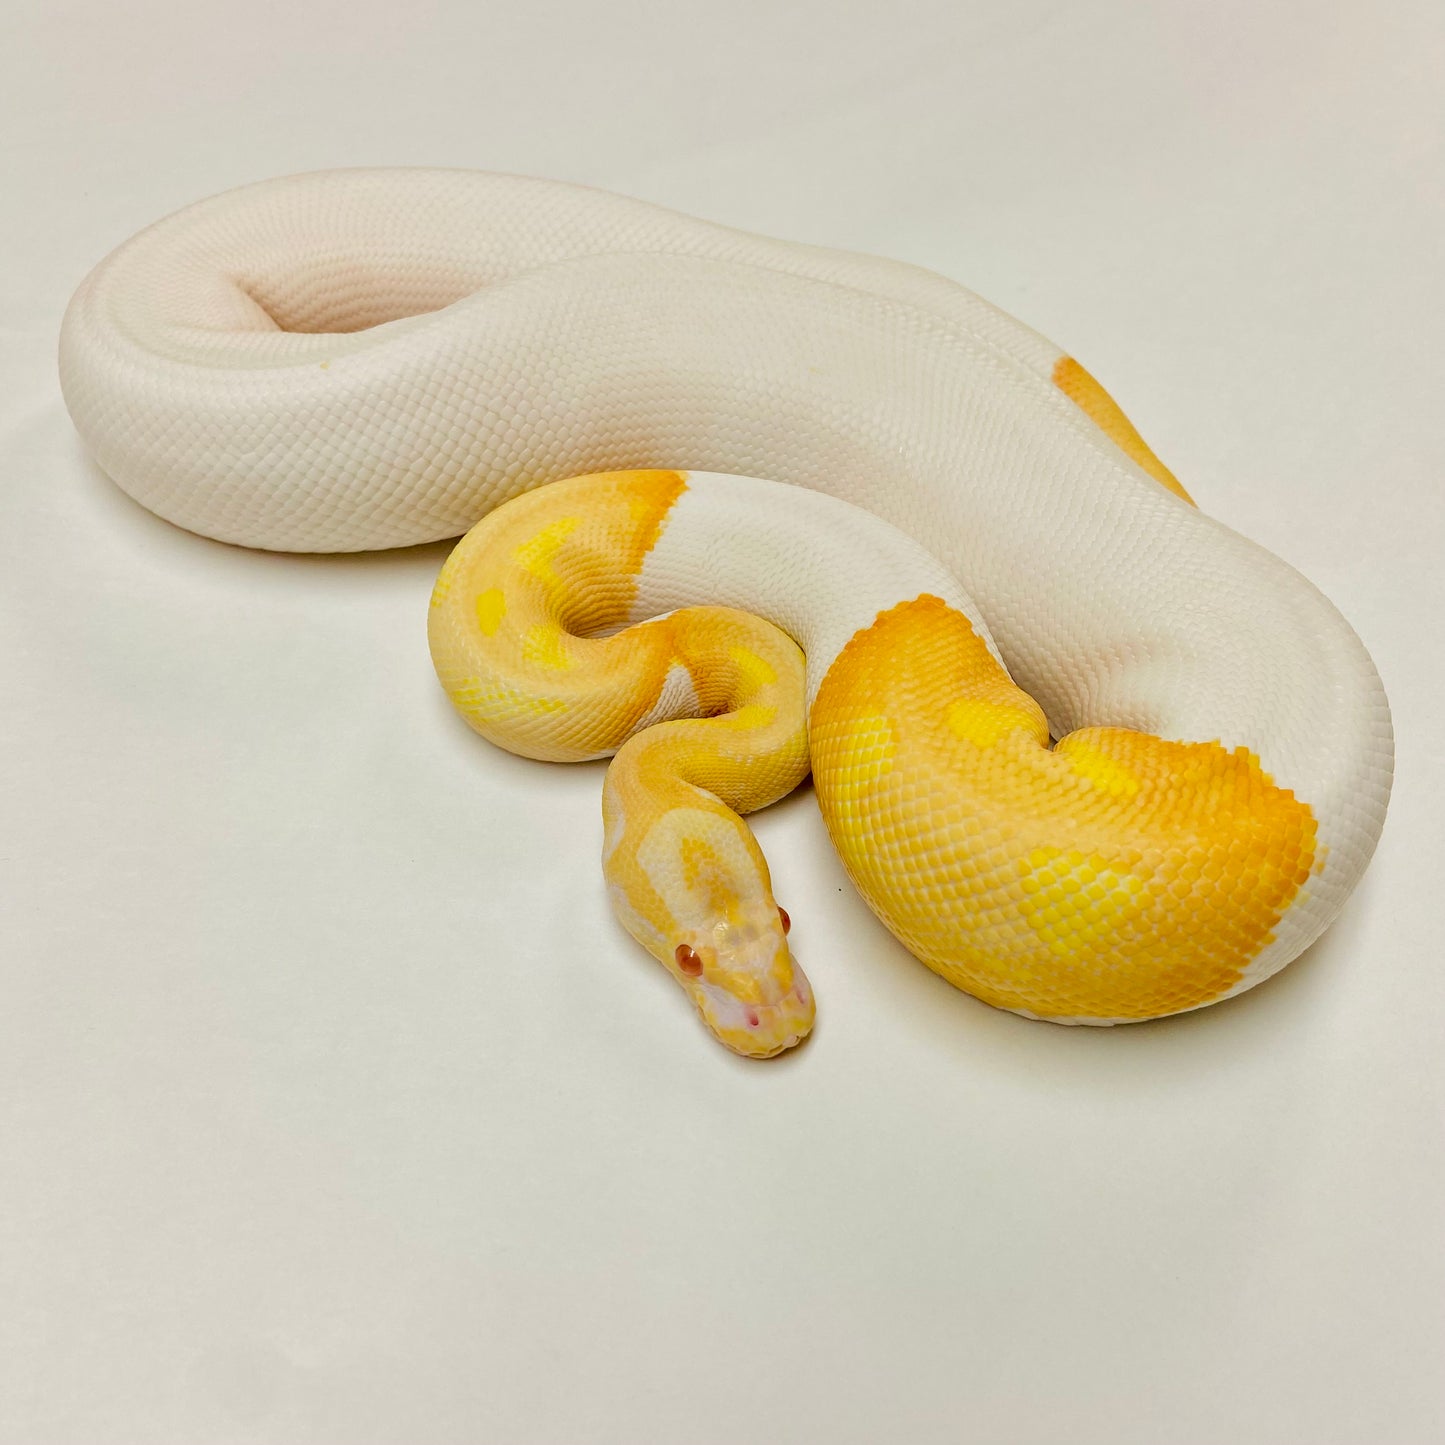 Albino Pied Ball Python- Male #2021M08